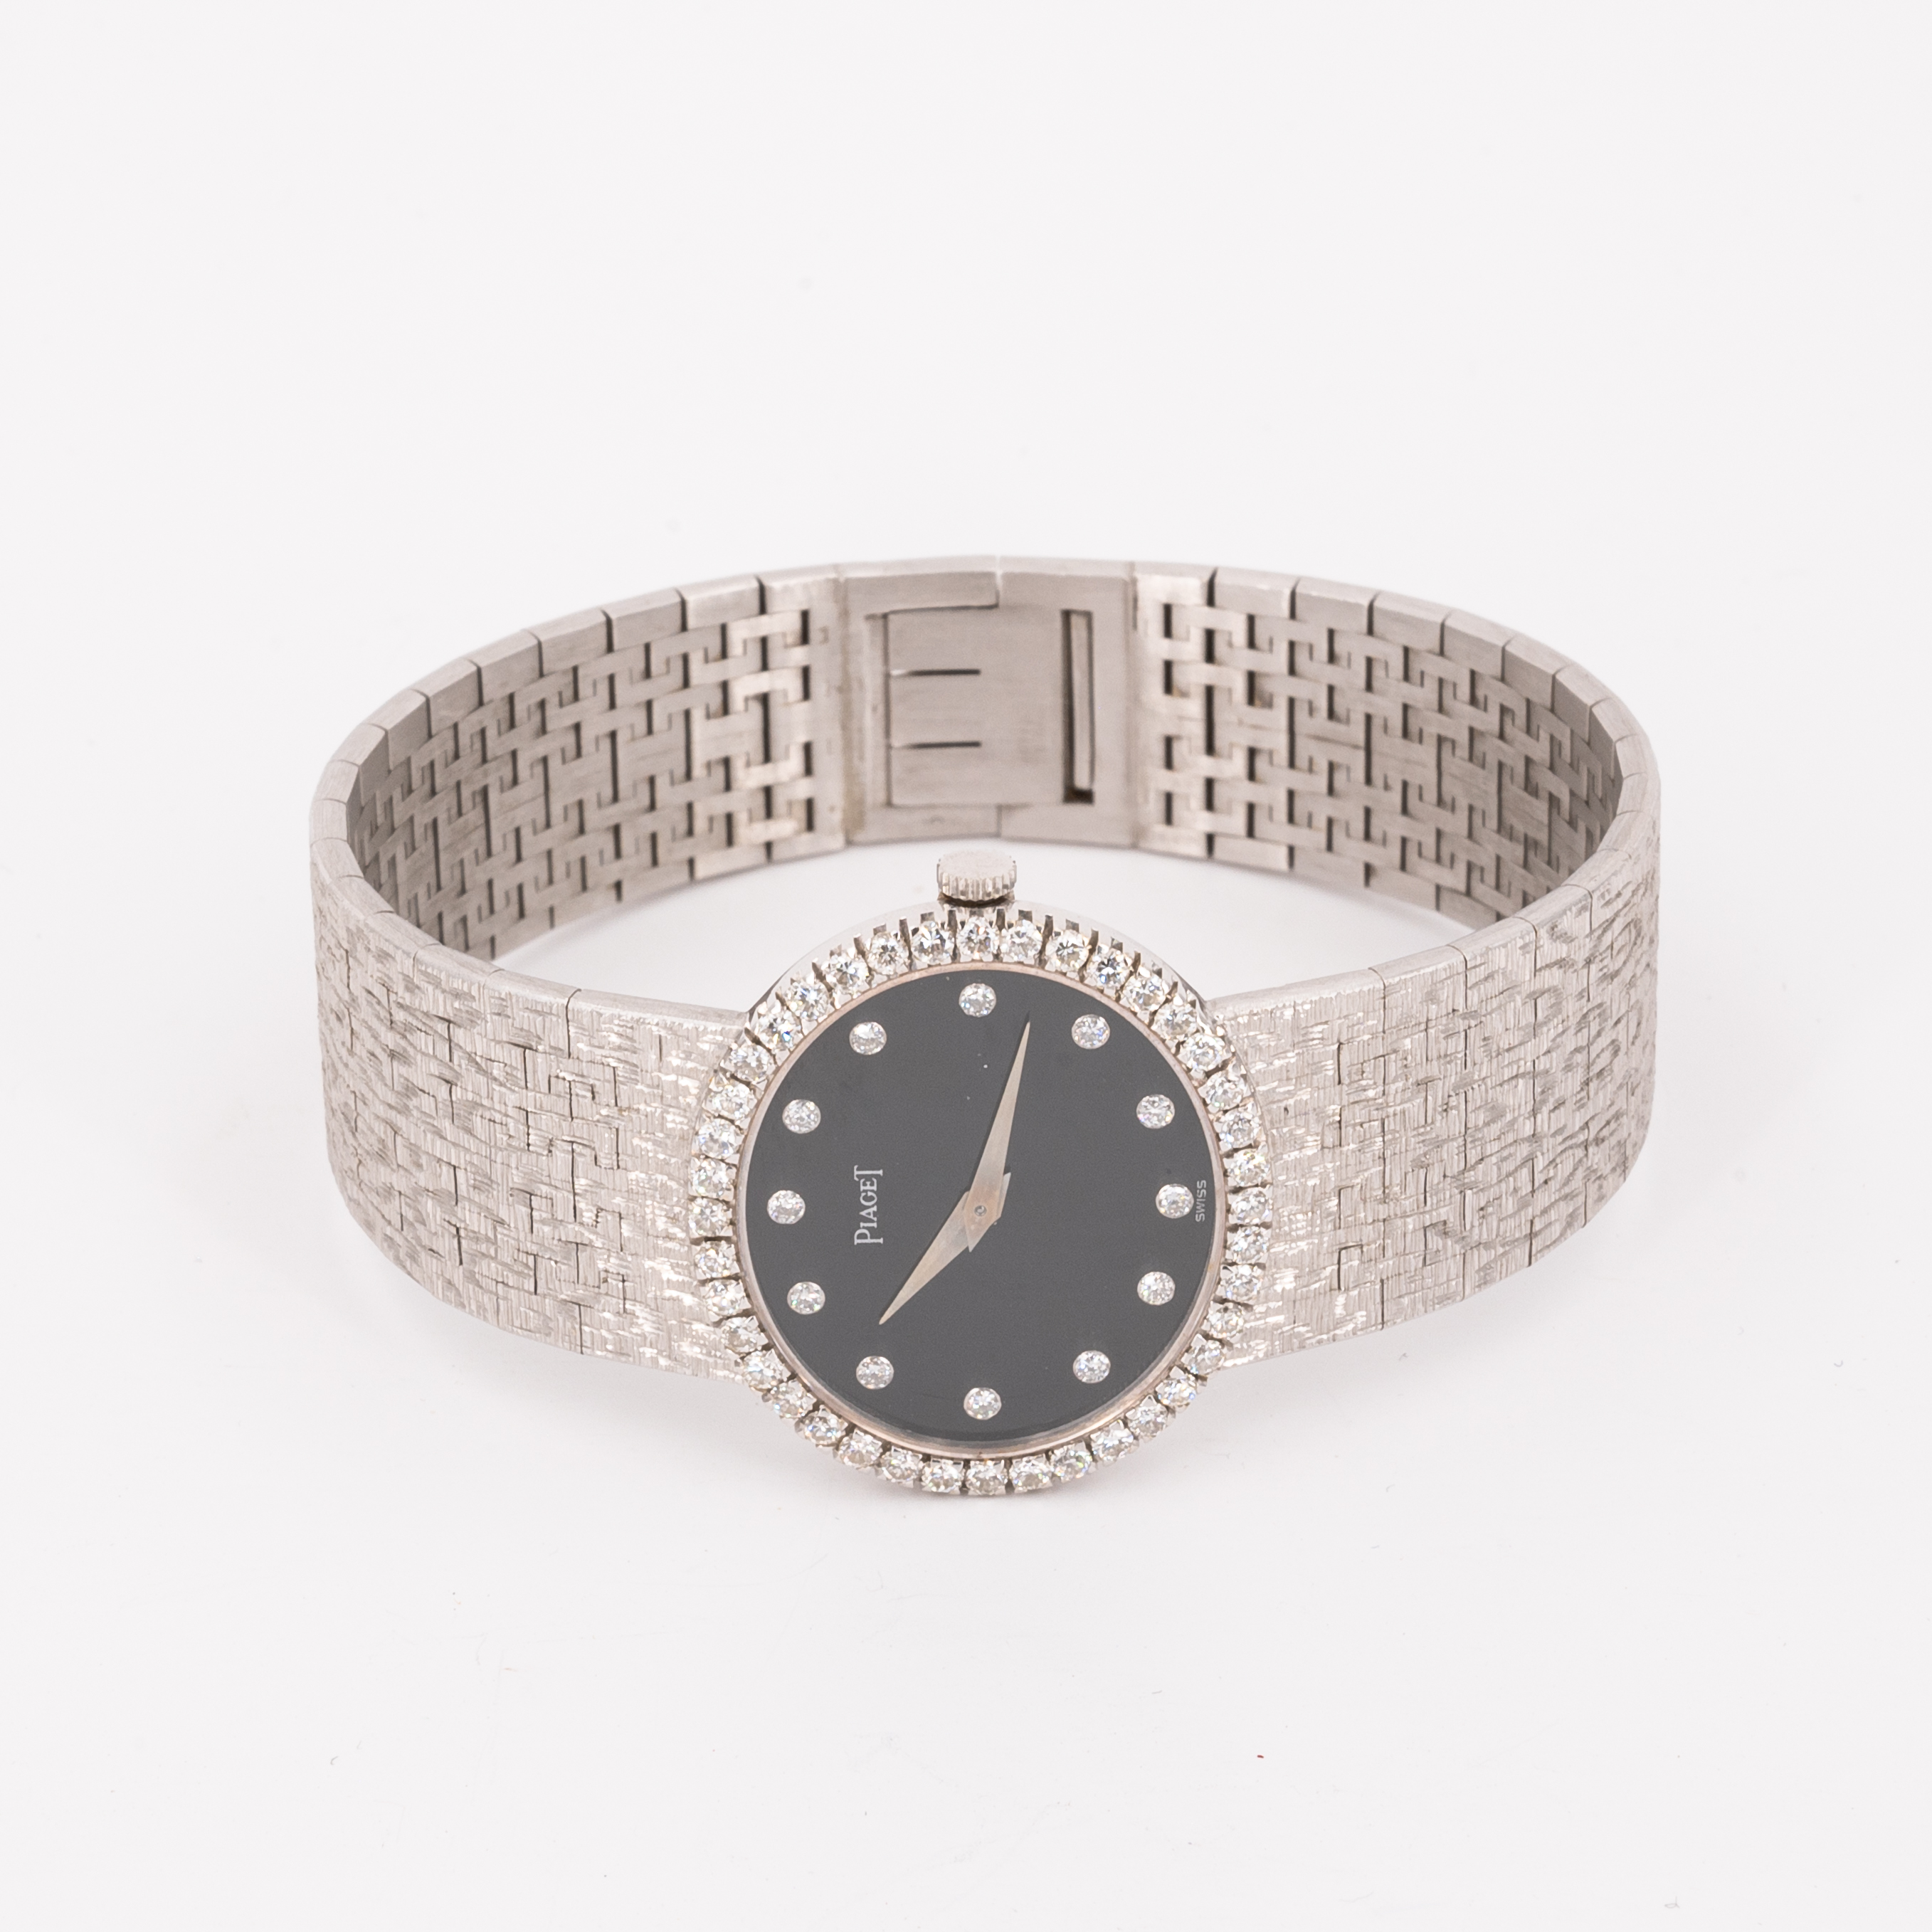 Piaget: Jewel Watch - Image 2 of 8